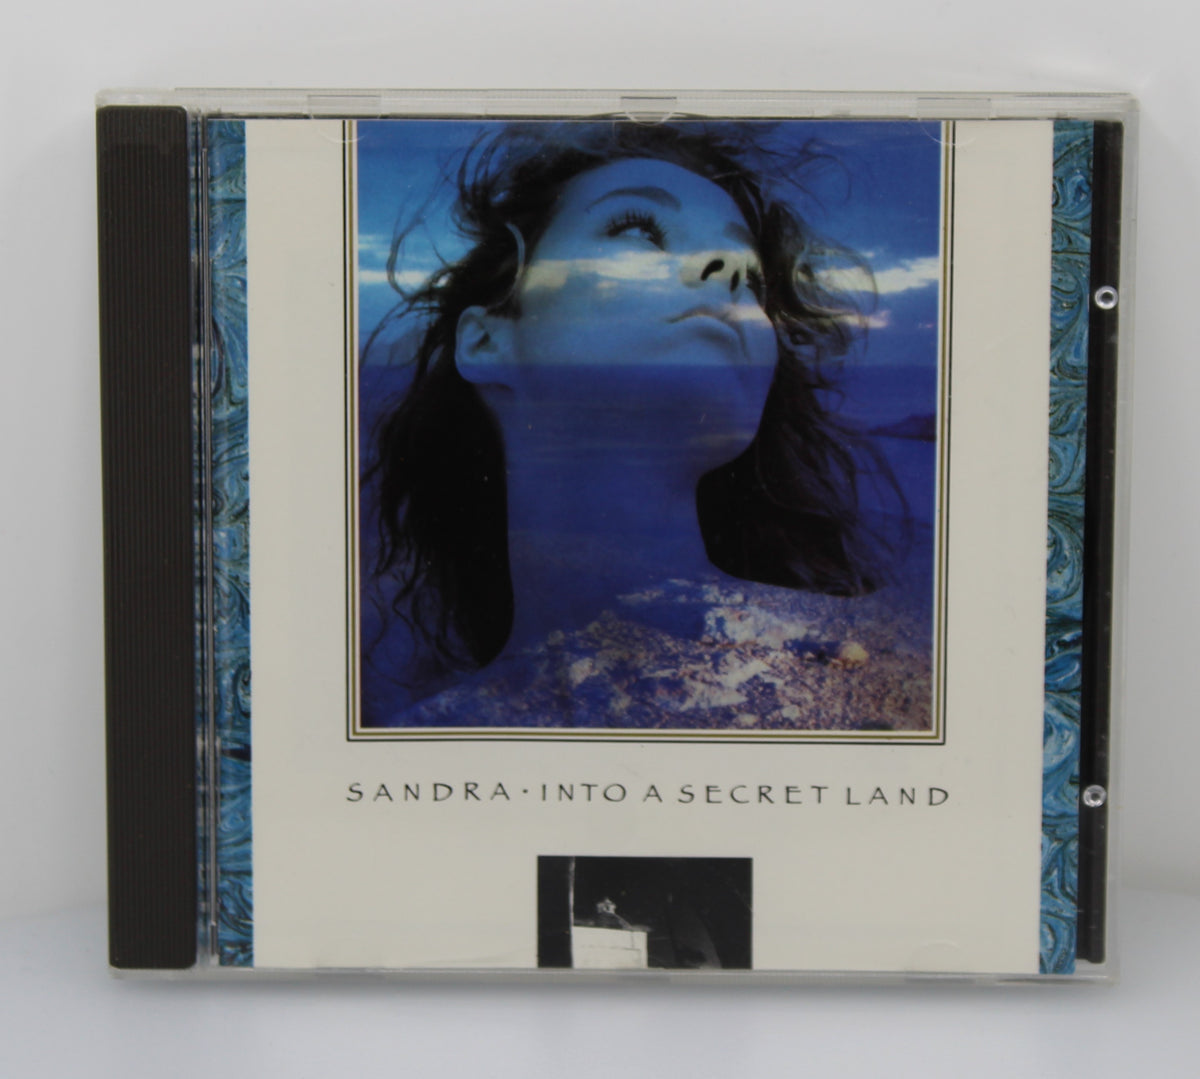 Sandra – Into A Secret Land, CD, Album, Picturedisc, Germany 1988